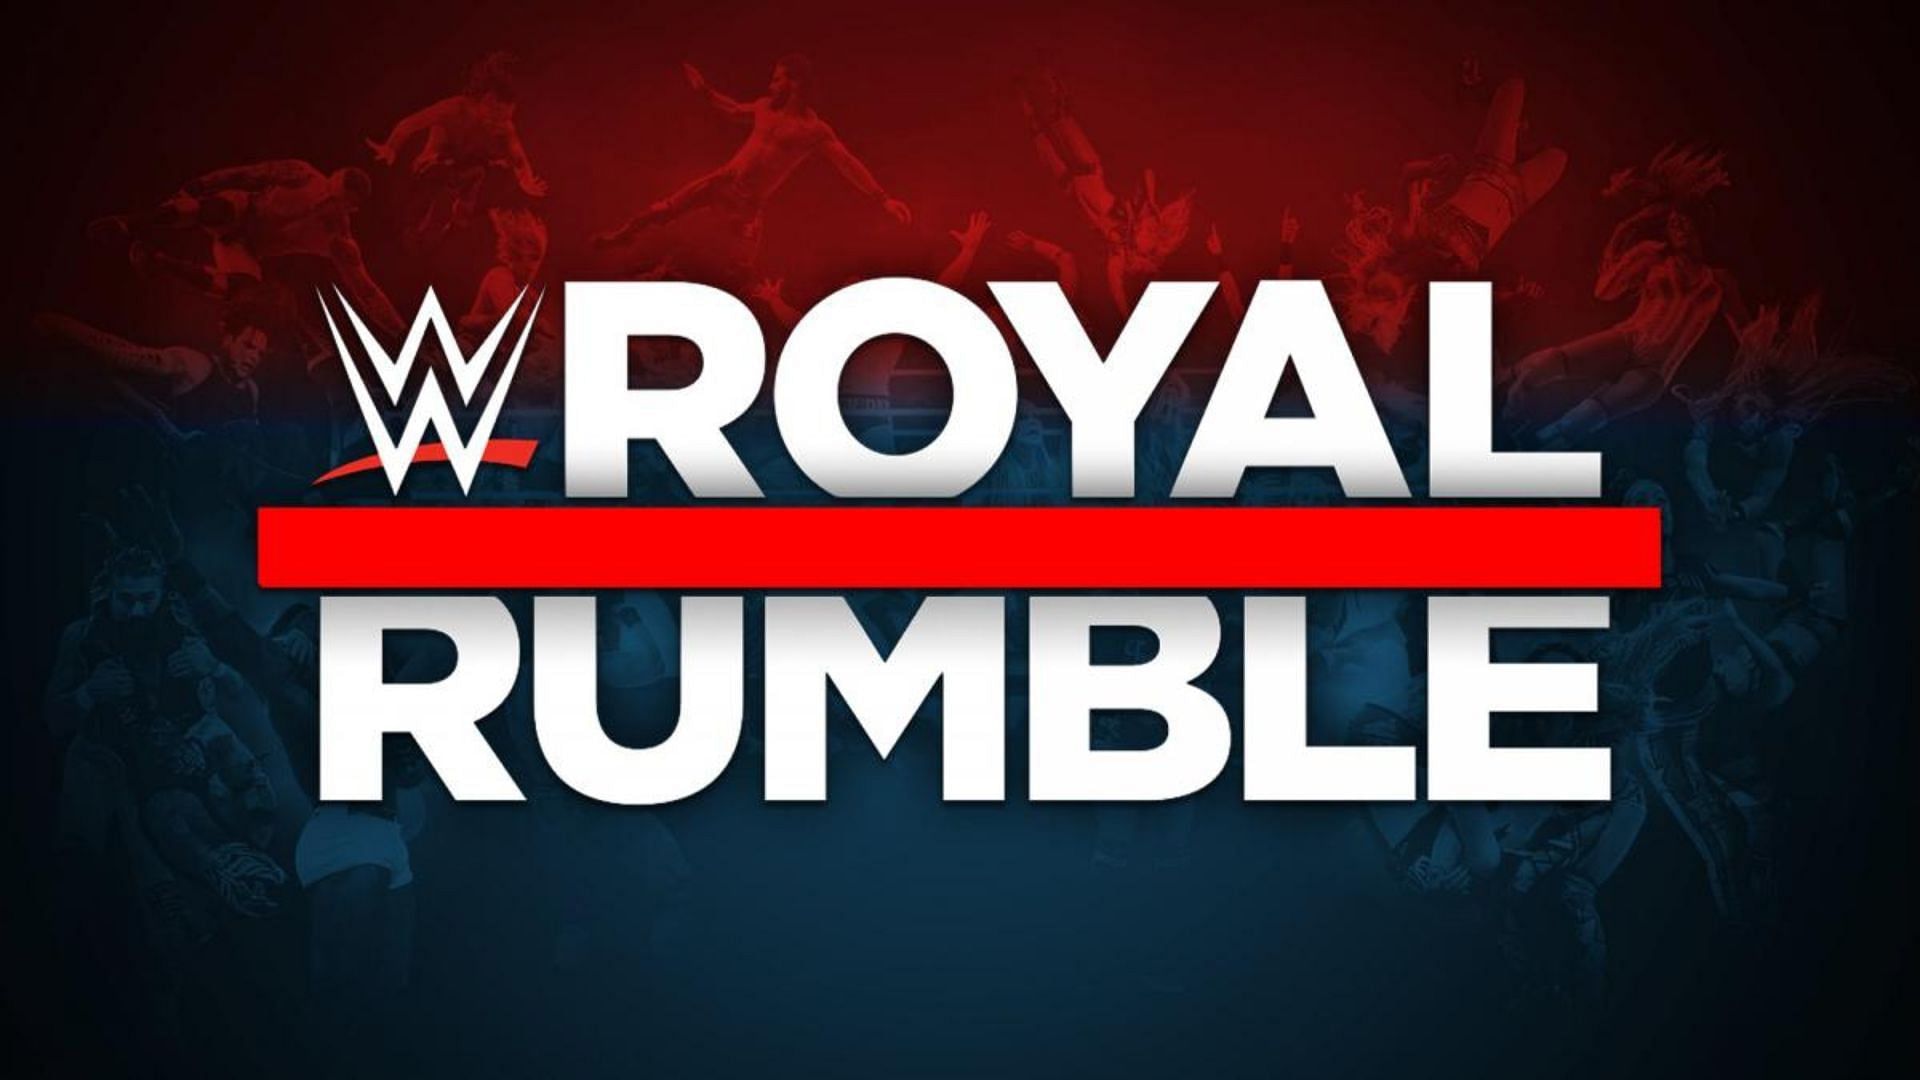 Royal Rumble PPV Logo (Credit:WWE.com)